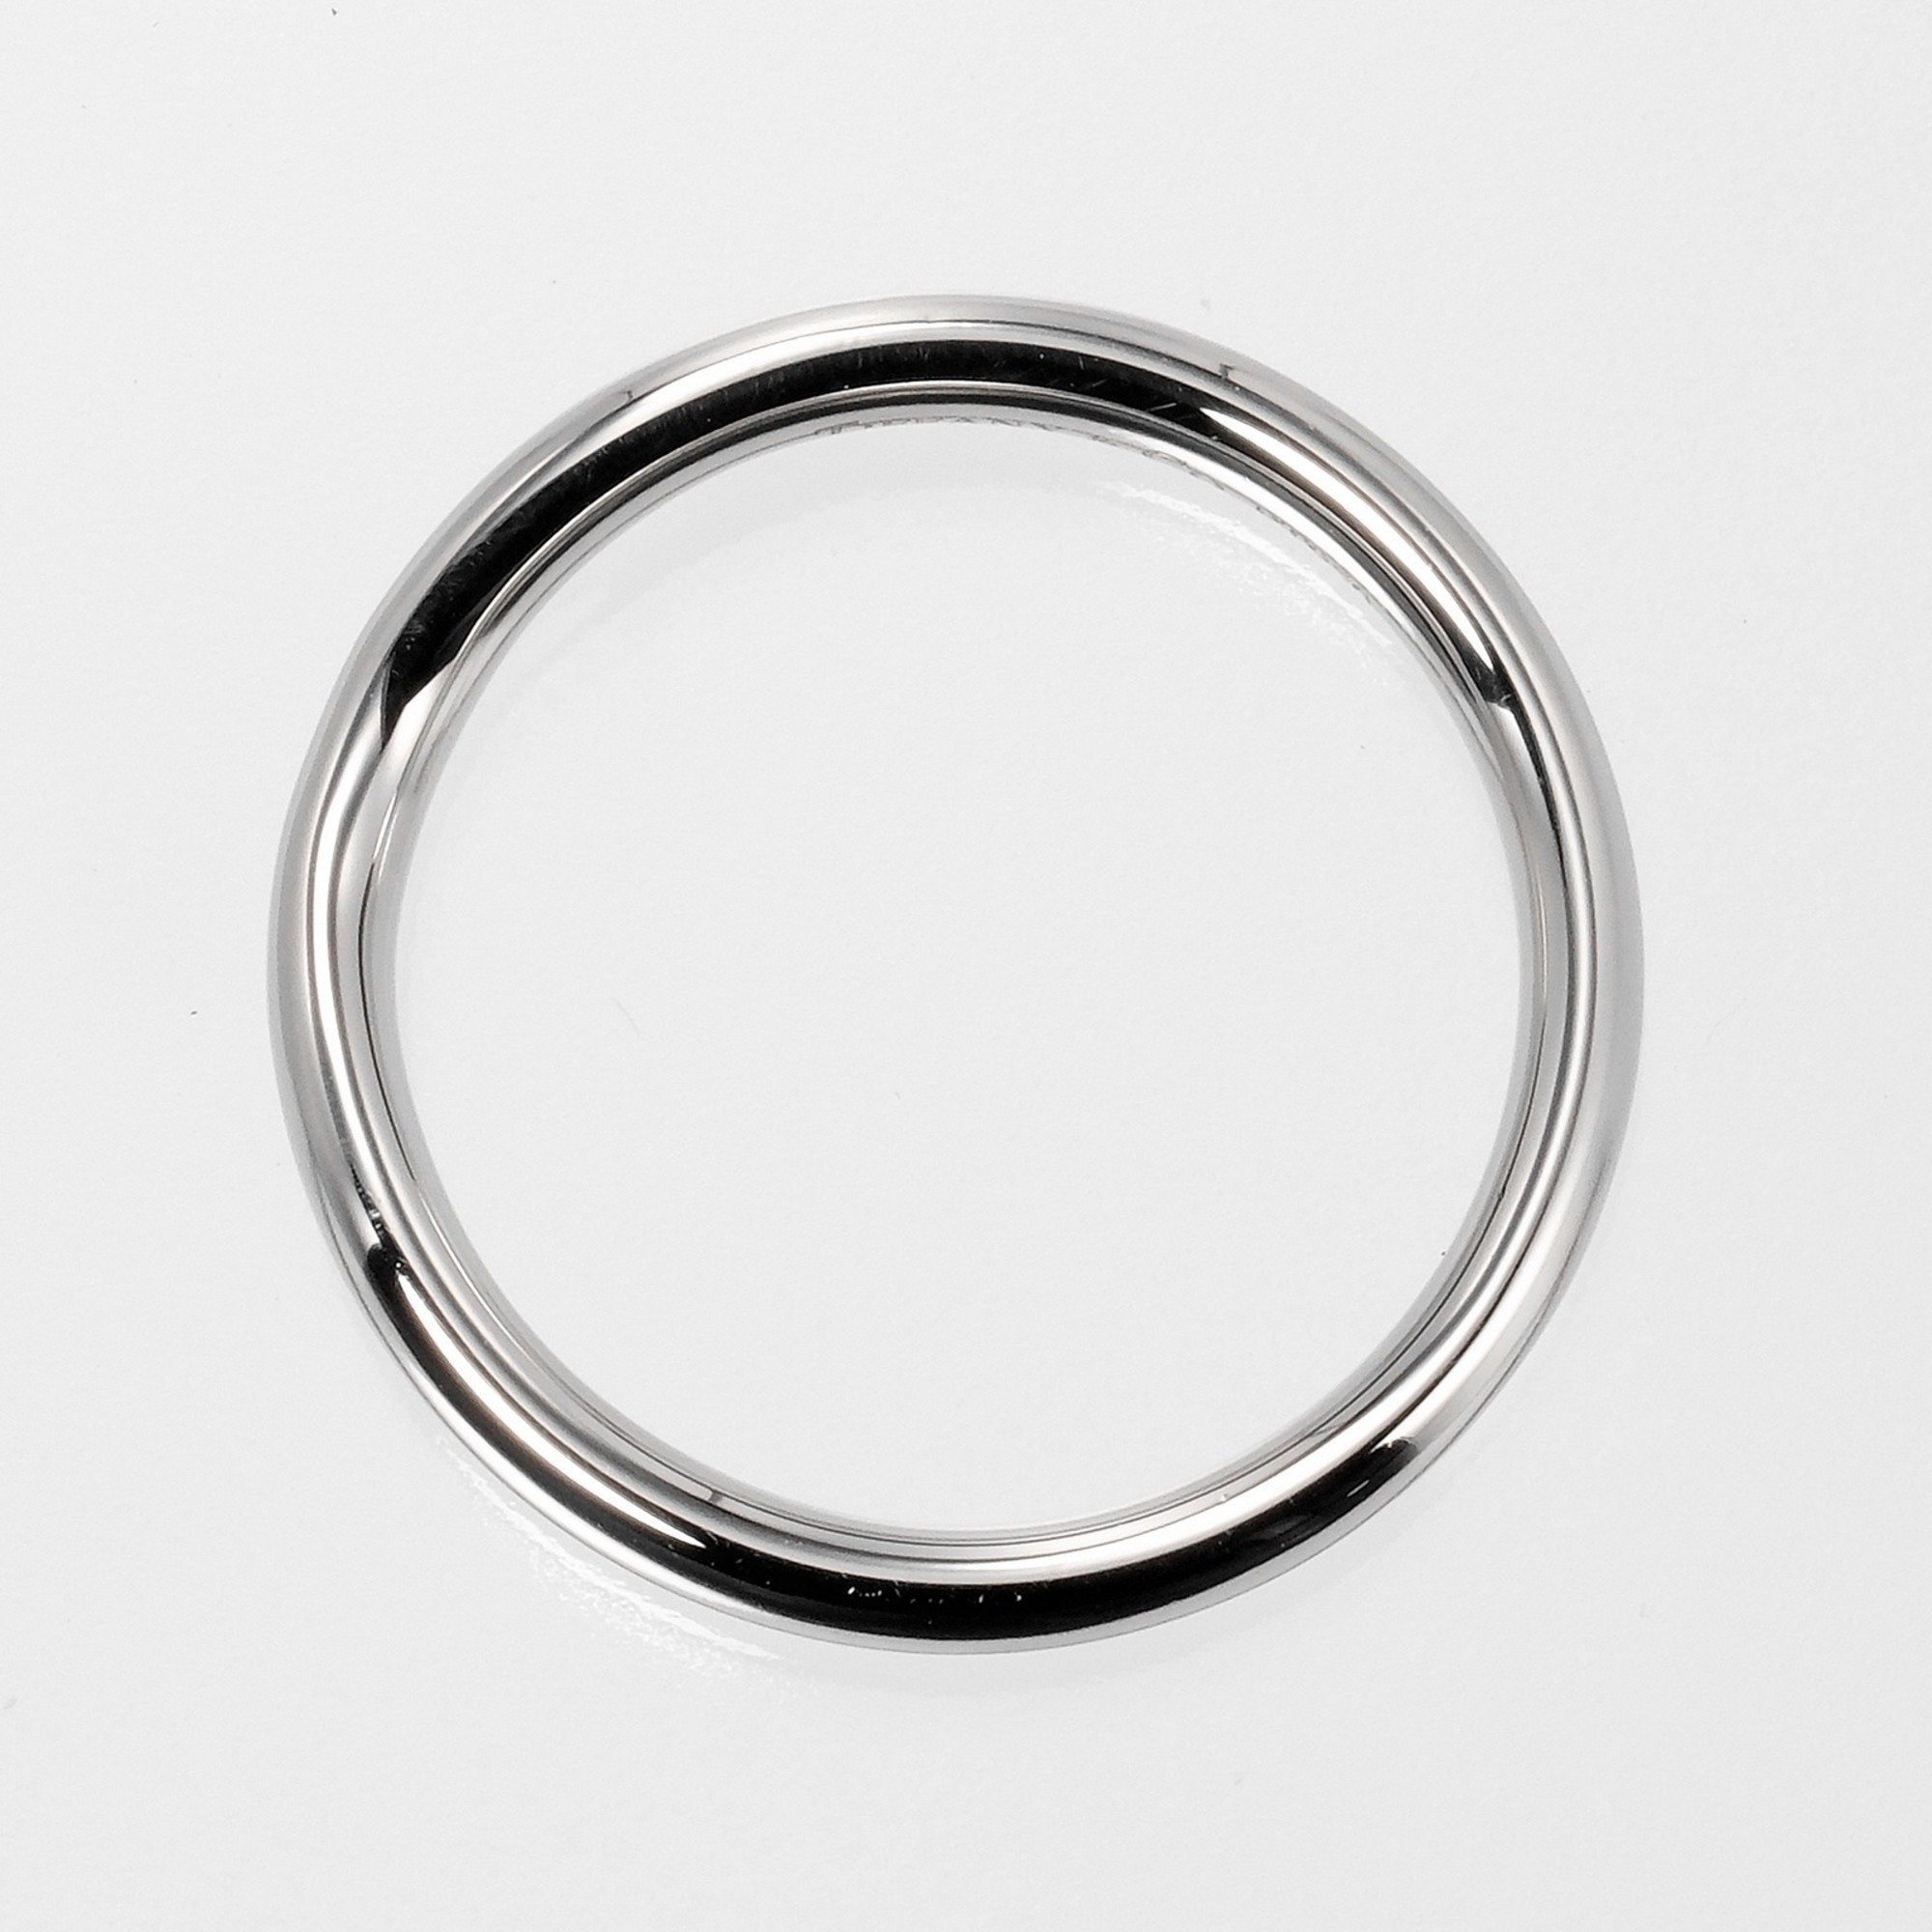 Tiffany TIFFANY&Co. Curved Band Ring 3mm No. 15 6.71g Pt950 Platinum